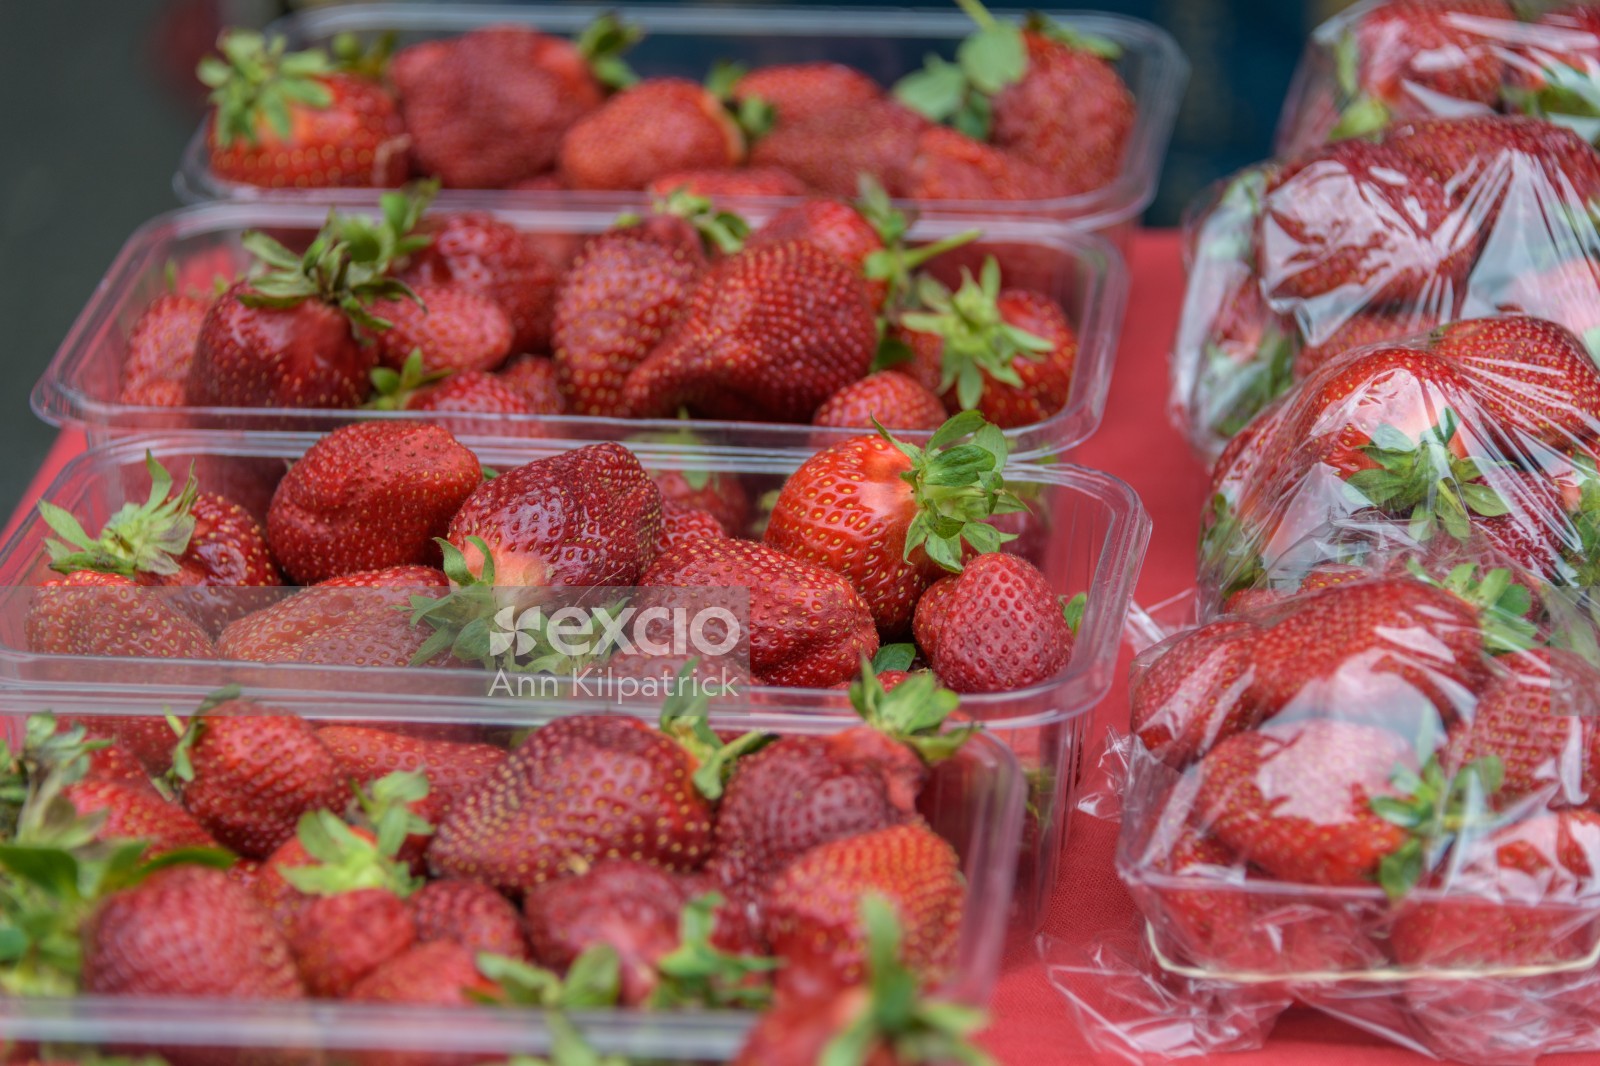 Fresh strawberries for sale